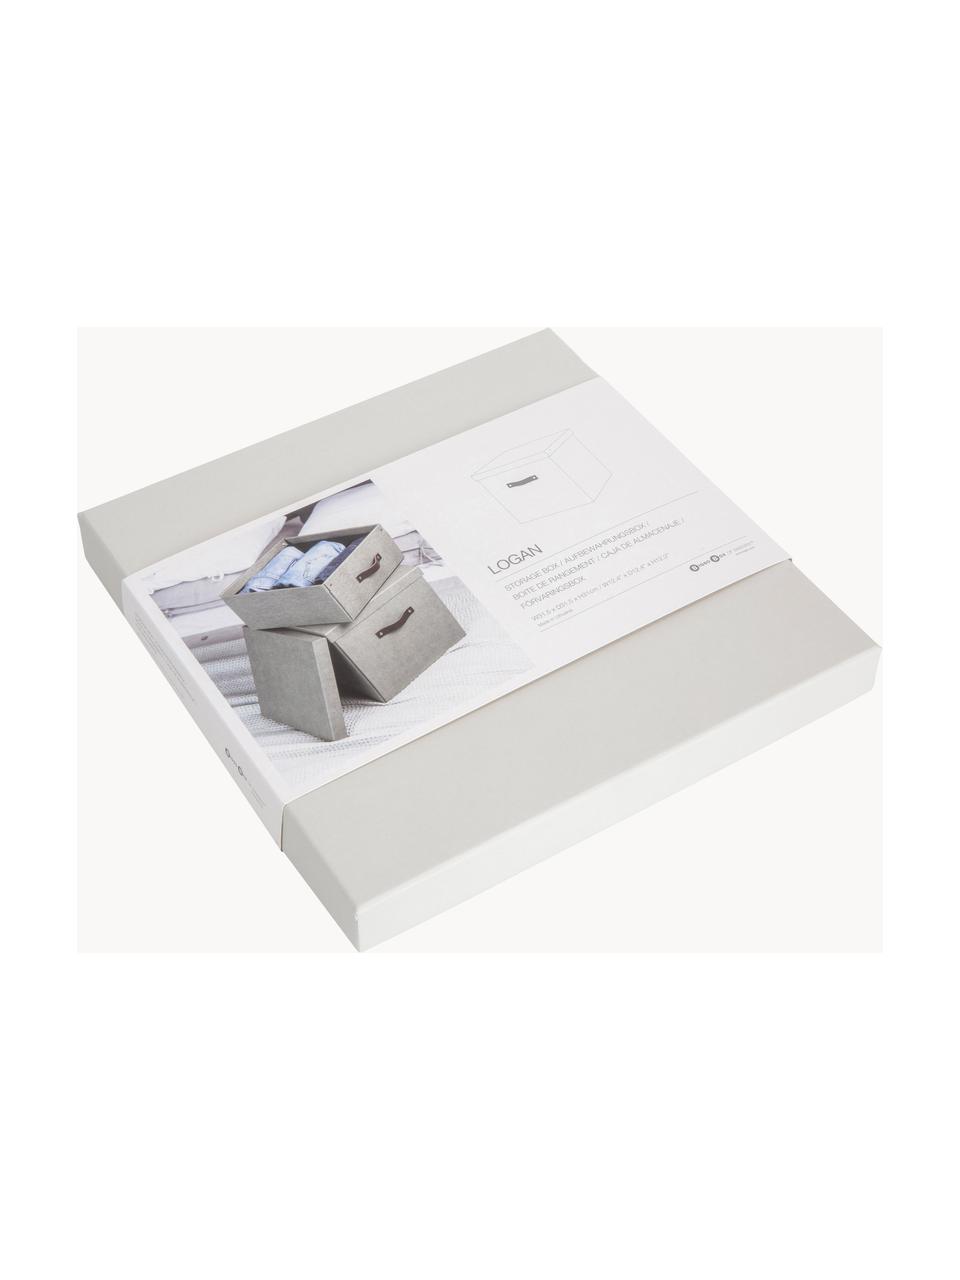 Caja Logan, Caja: cartón macizo laminado, Asa: cuero, Blanco, L 32 x An 32 cm